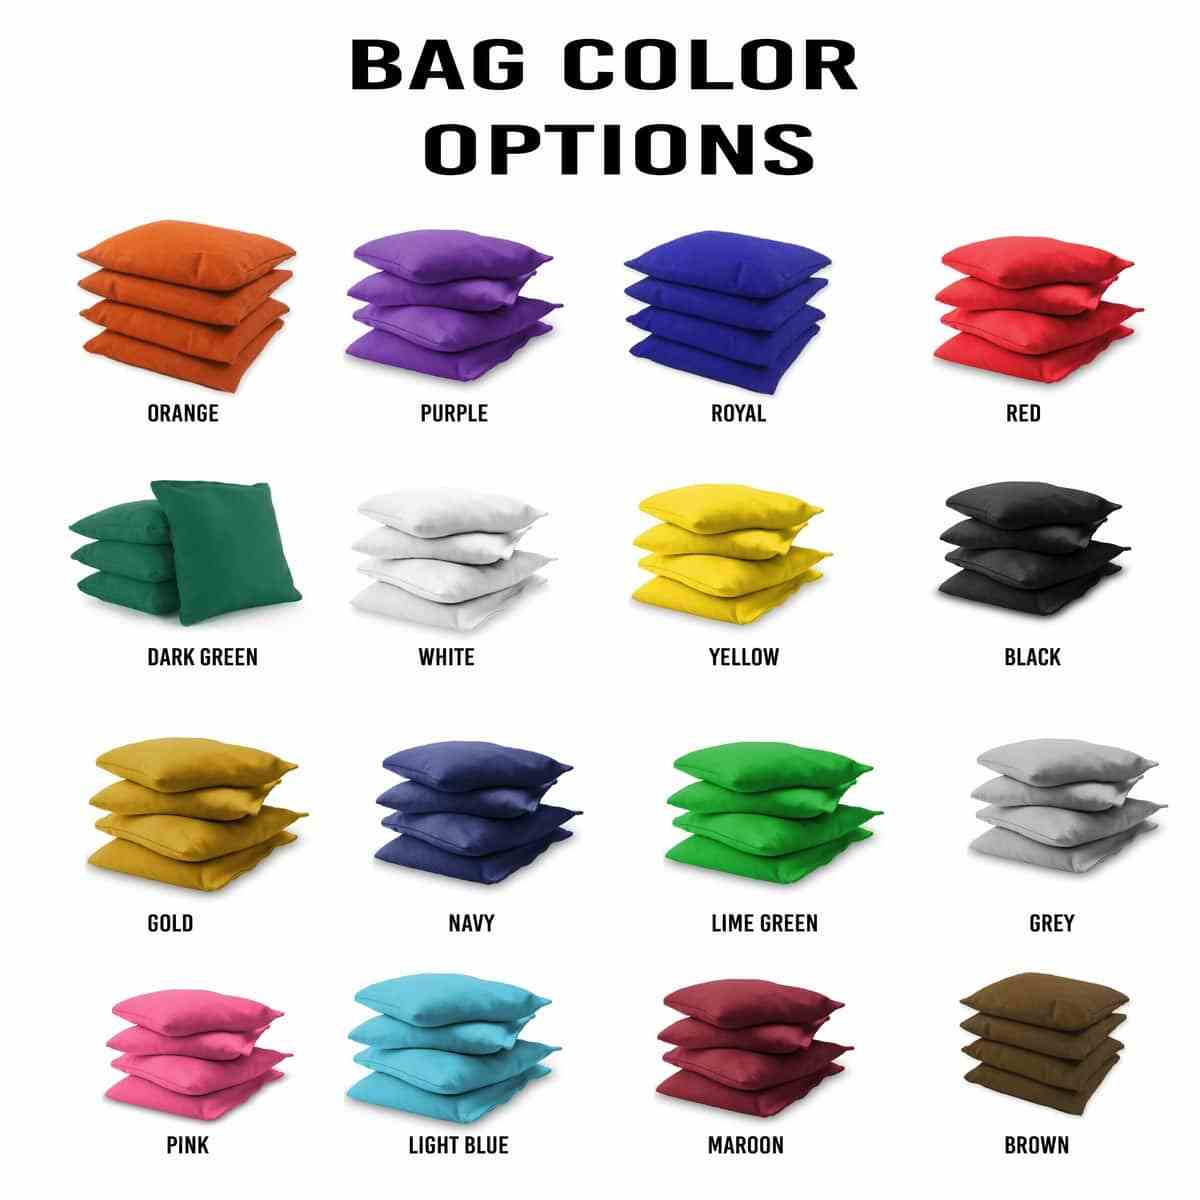 Racing 2x4 bag colors